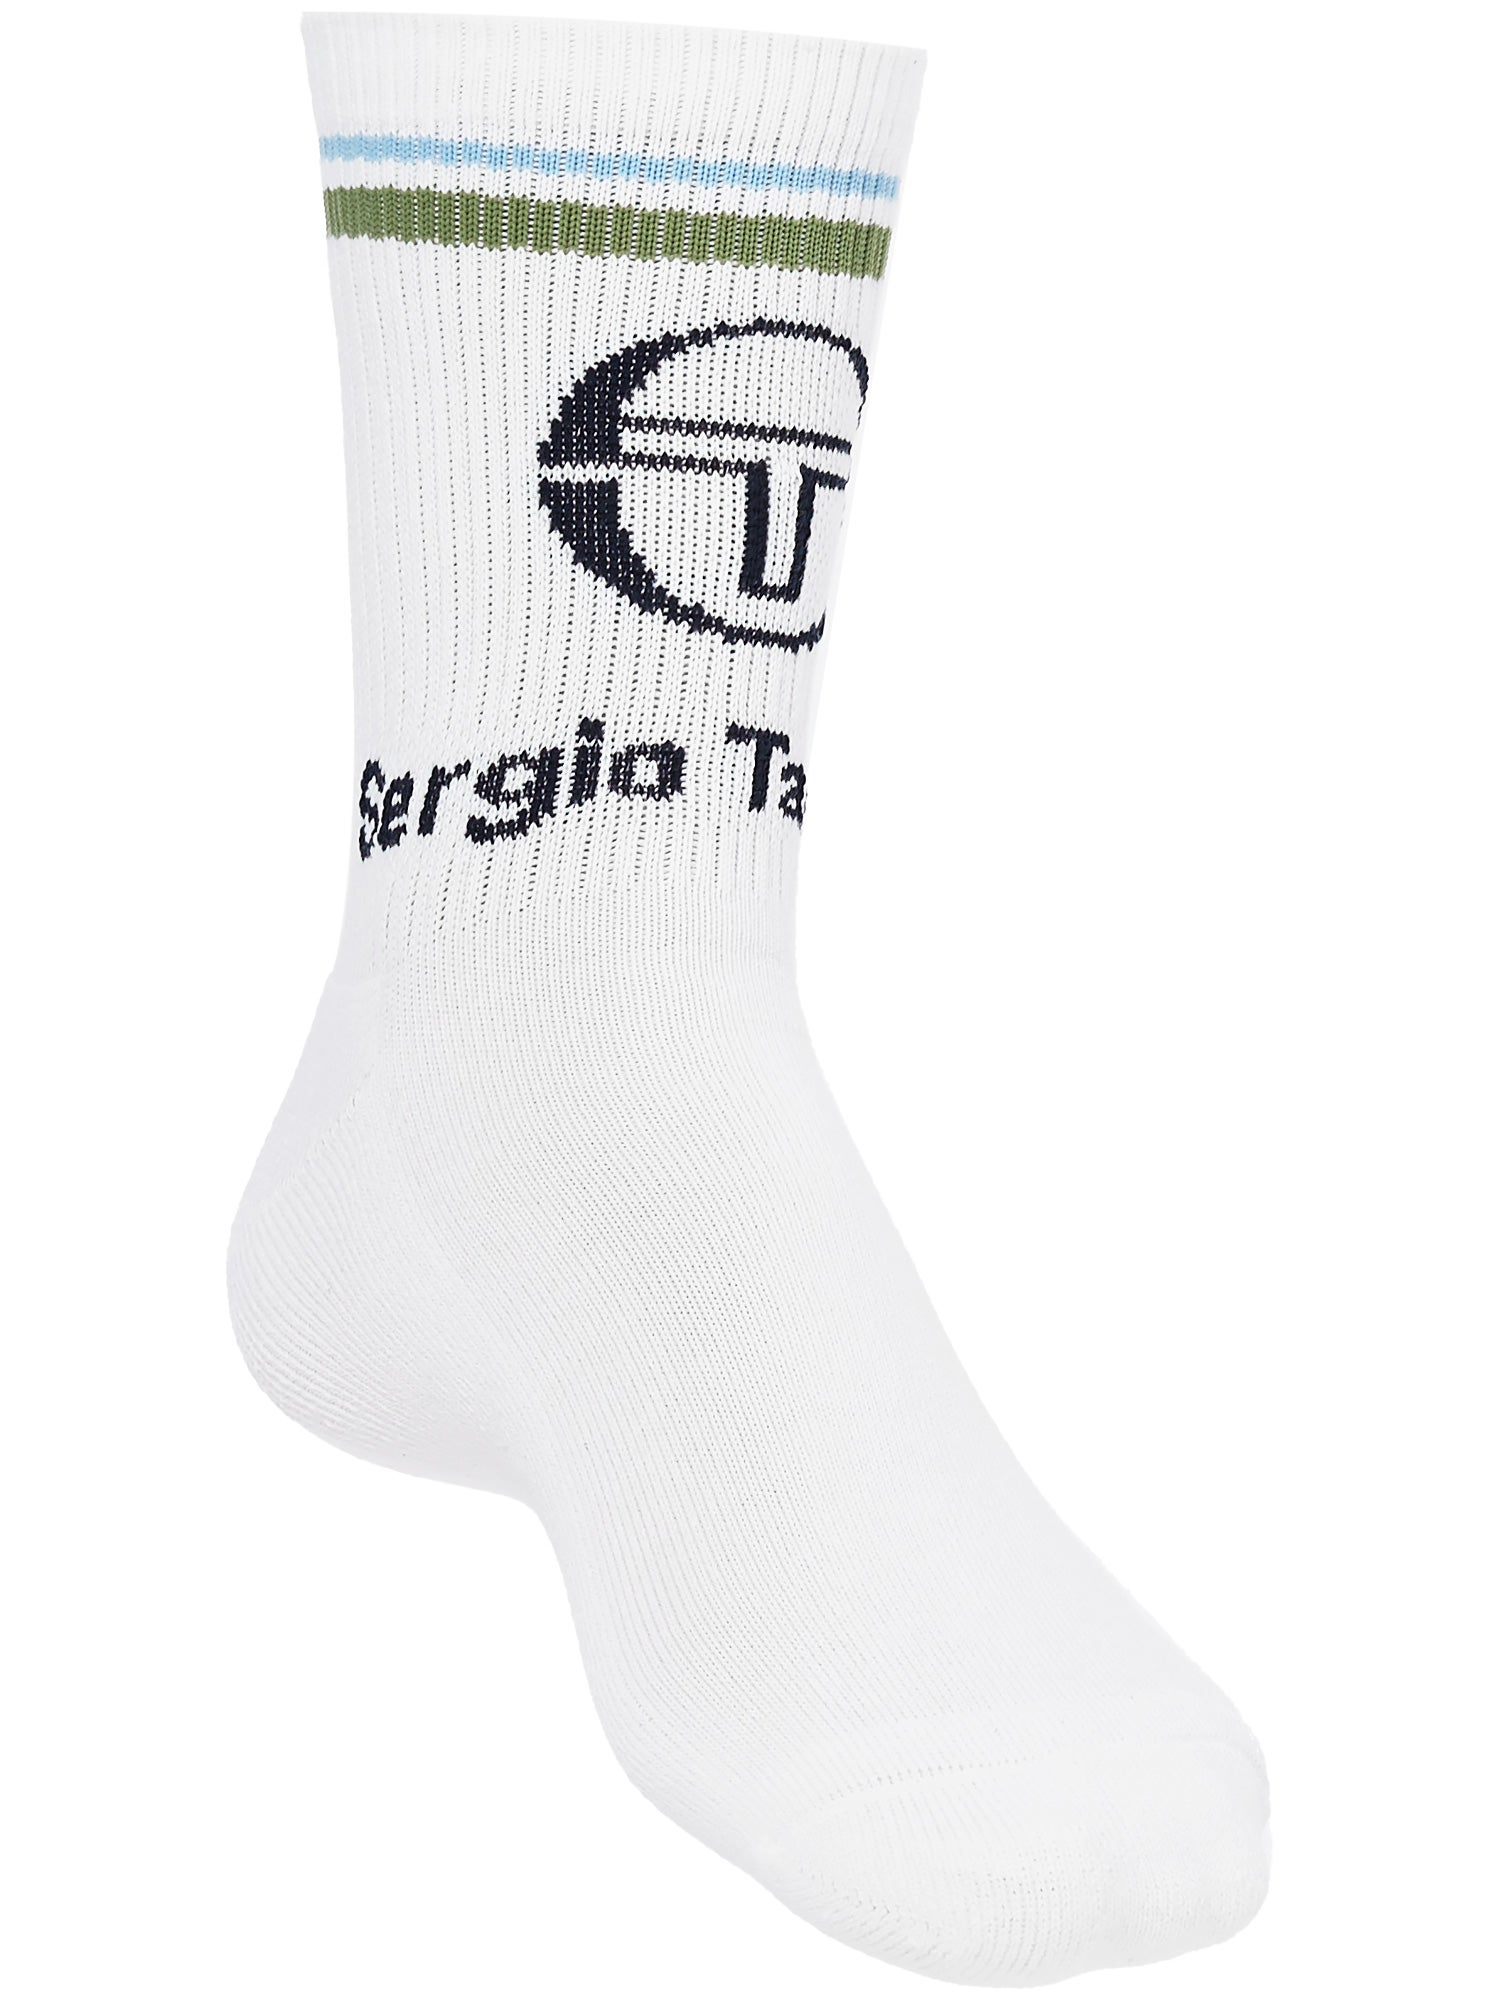 Sergio Tacchini Mens Pro Socks Navy Blue White Sports Tennis Breathable 